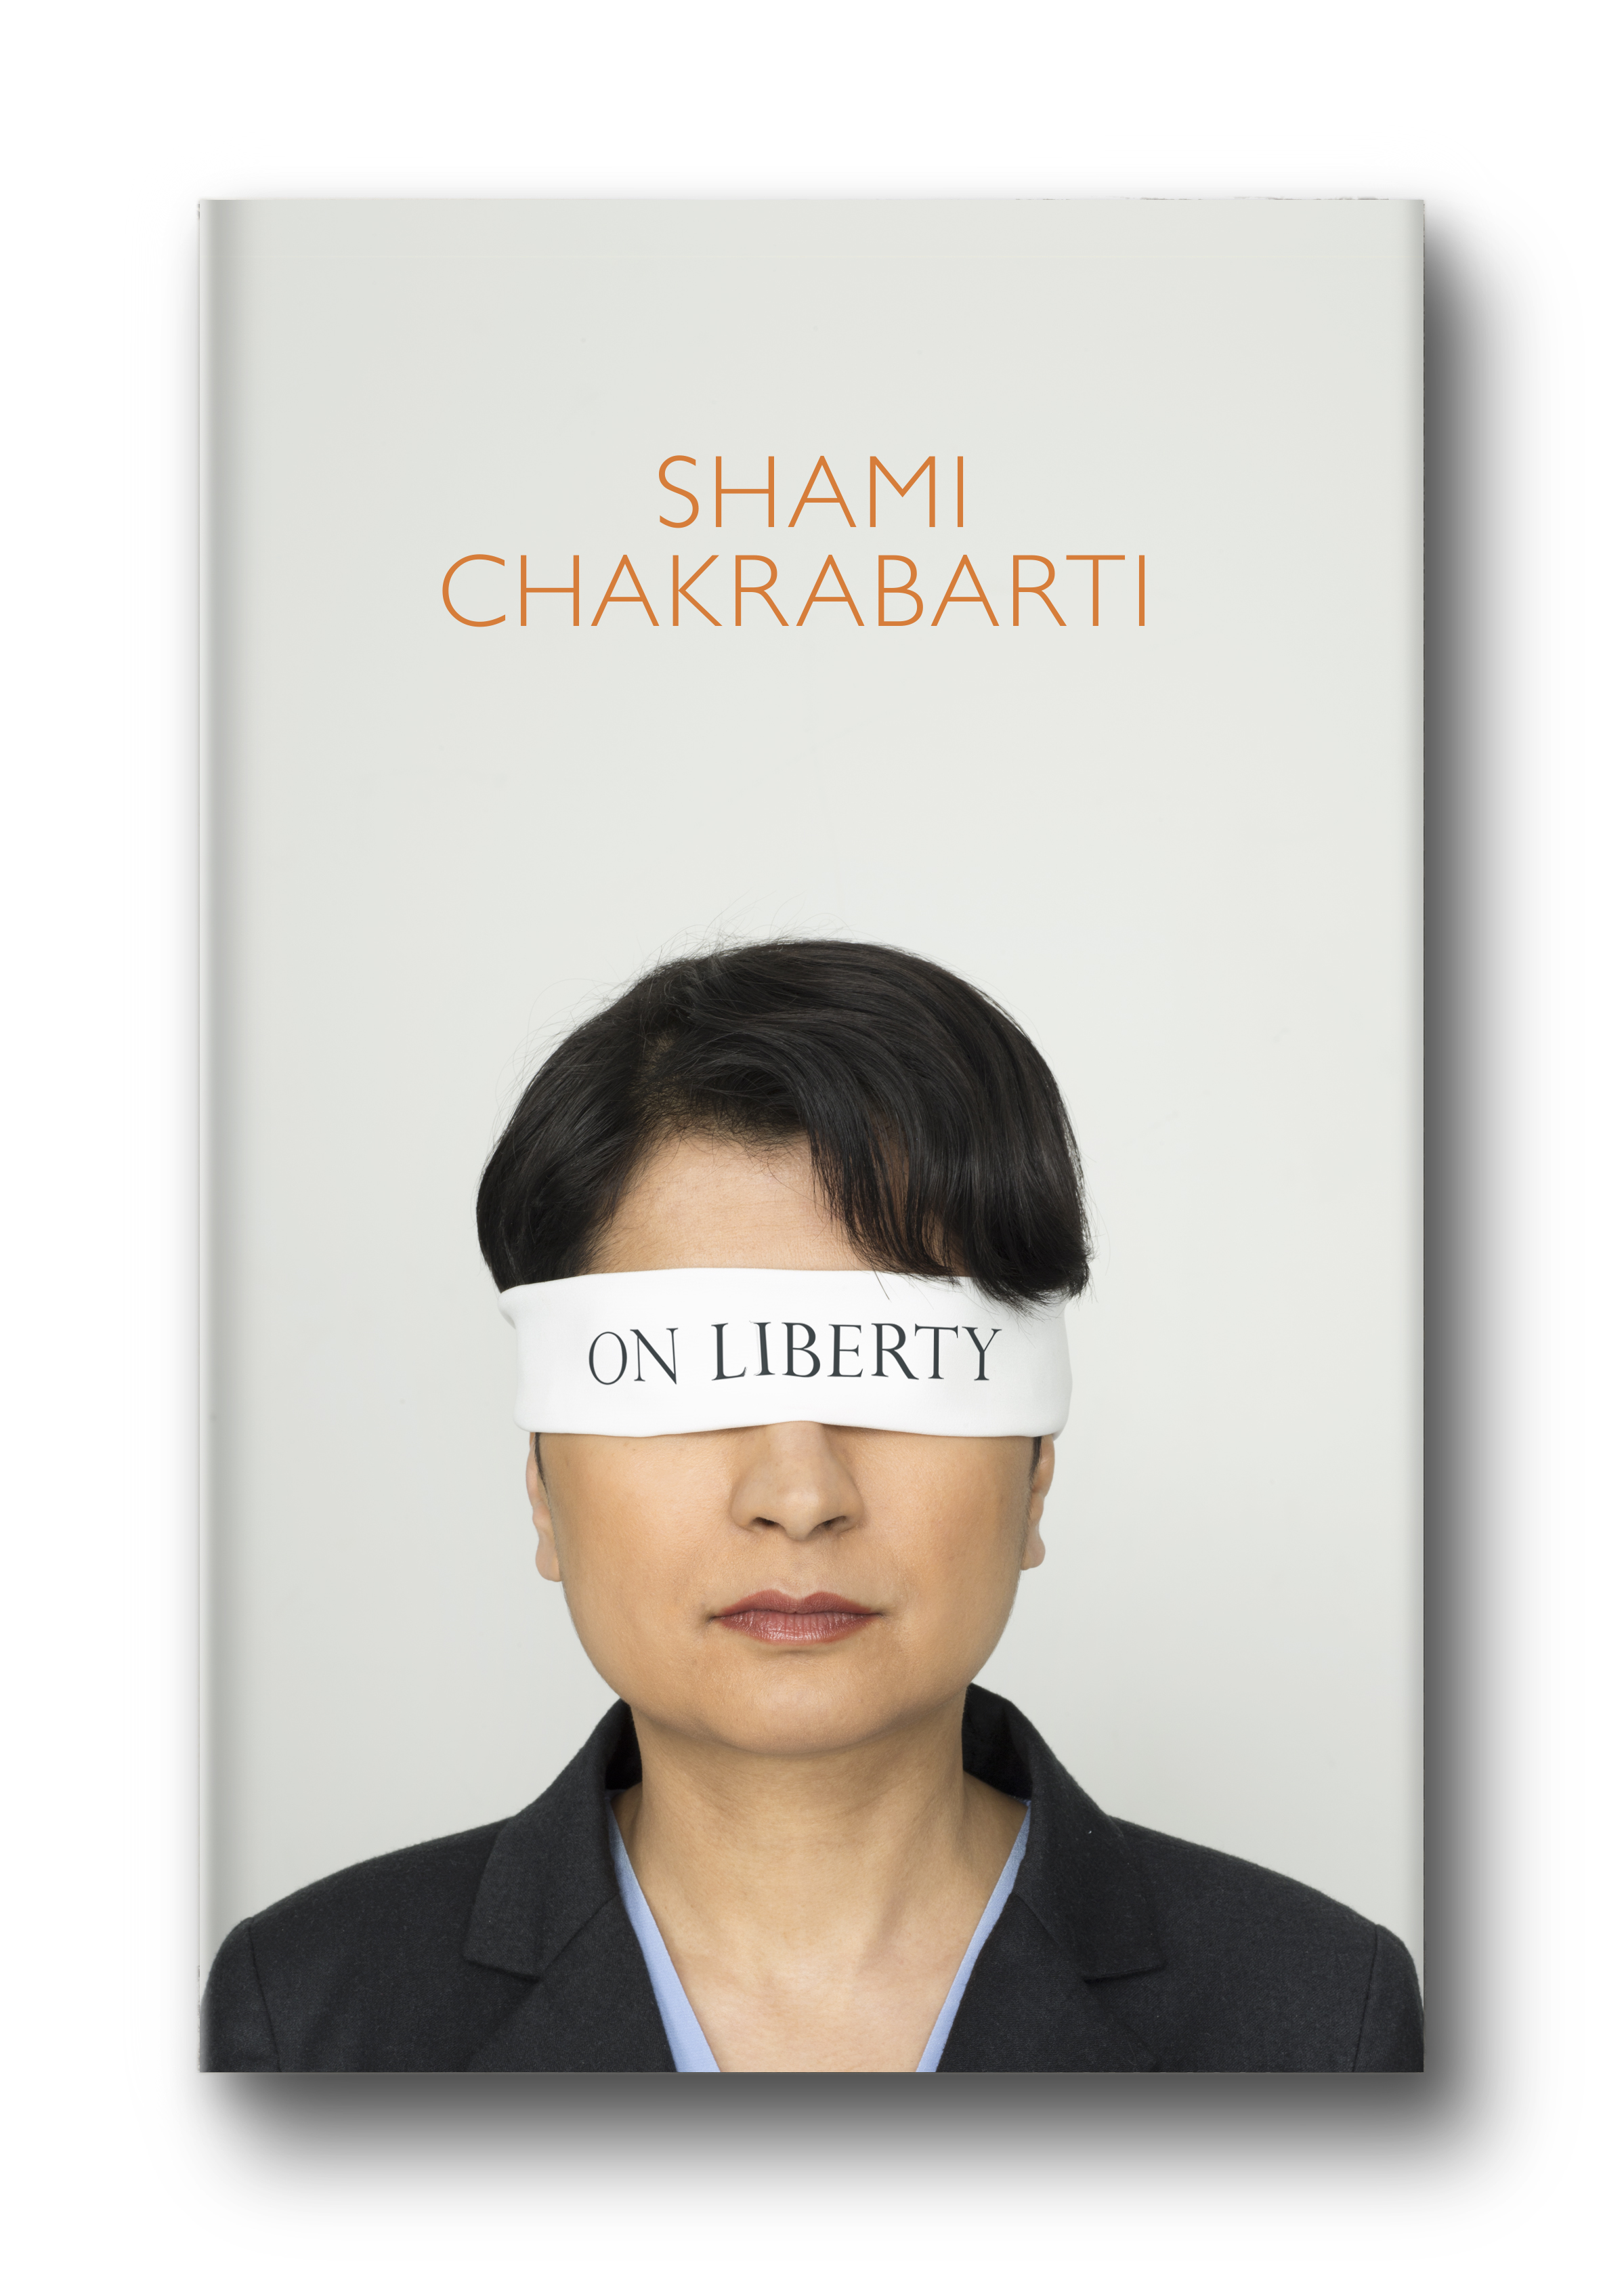  On Liberty by Shami Chakrabarti - Art Direction/Design: Jim Stoddart Photography: Paul Stuart    